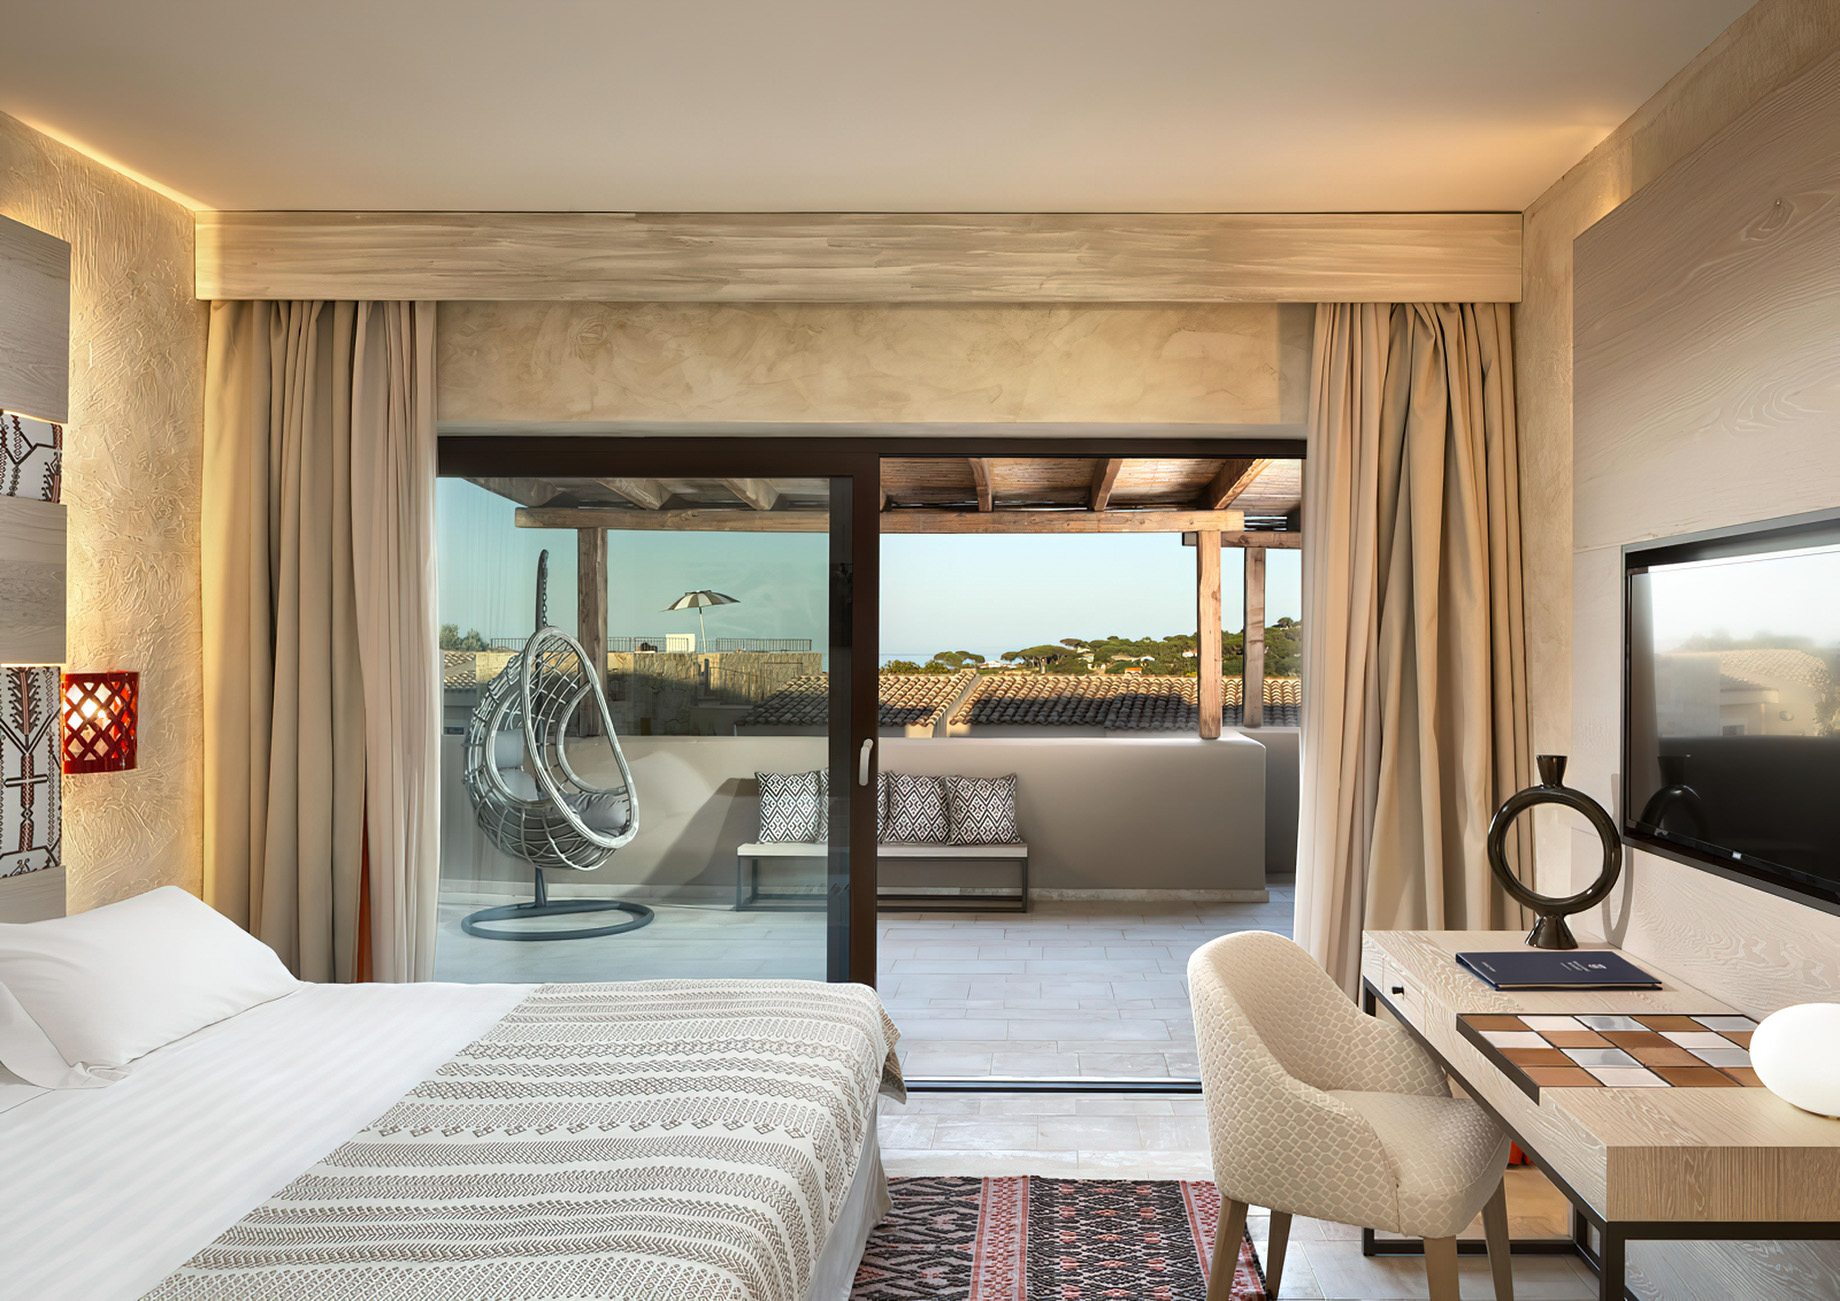 Baglioni Resort Sardinia – San Teodoro, Sardegna, Italy – Tavolara Suite Bedroom